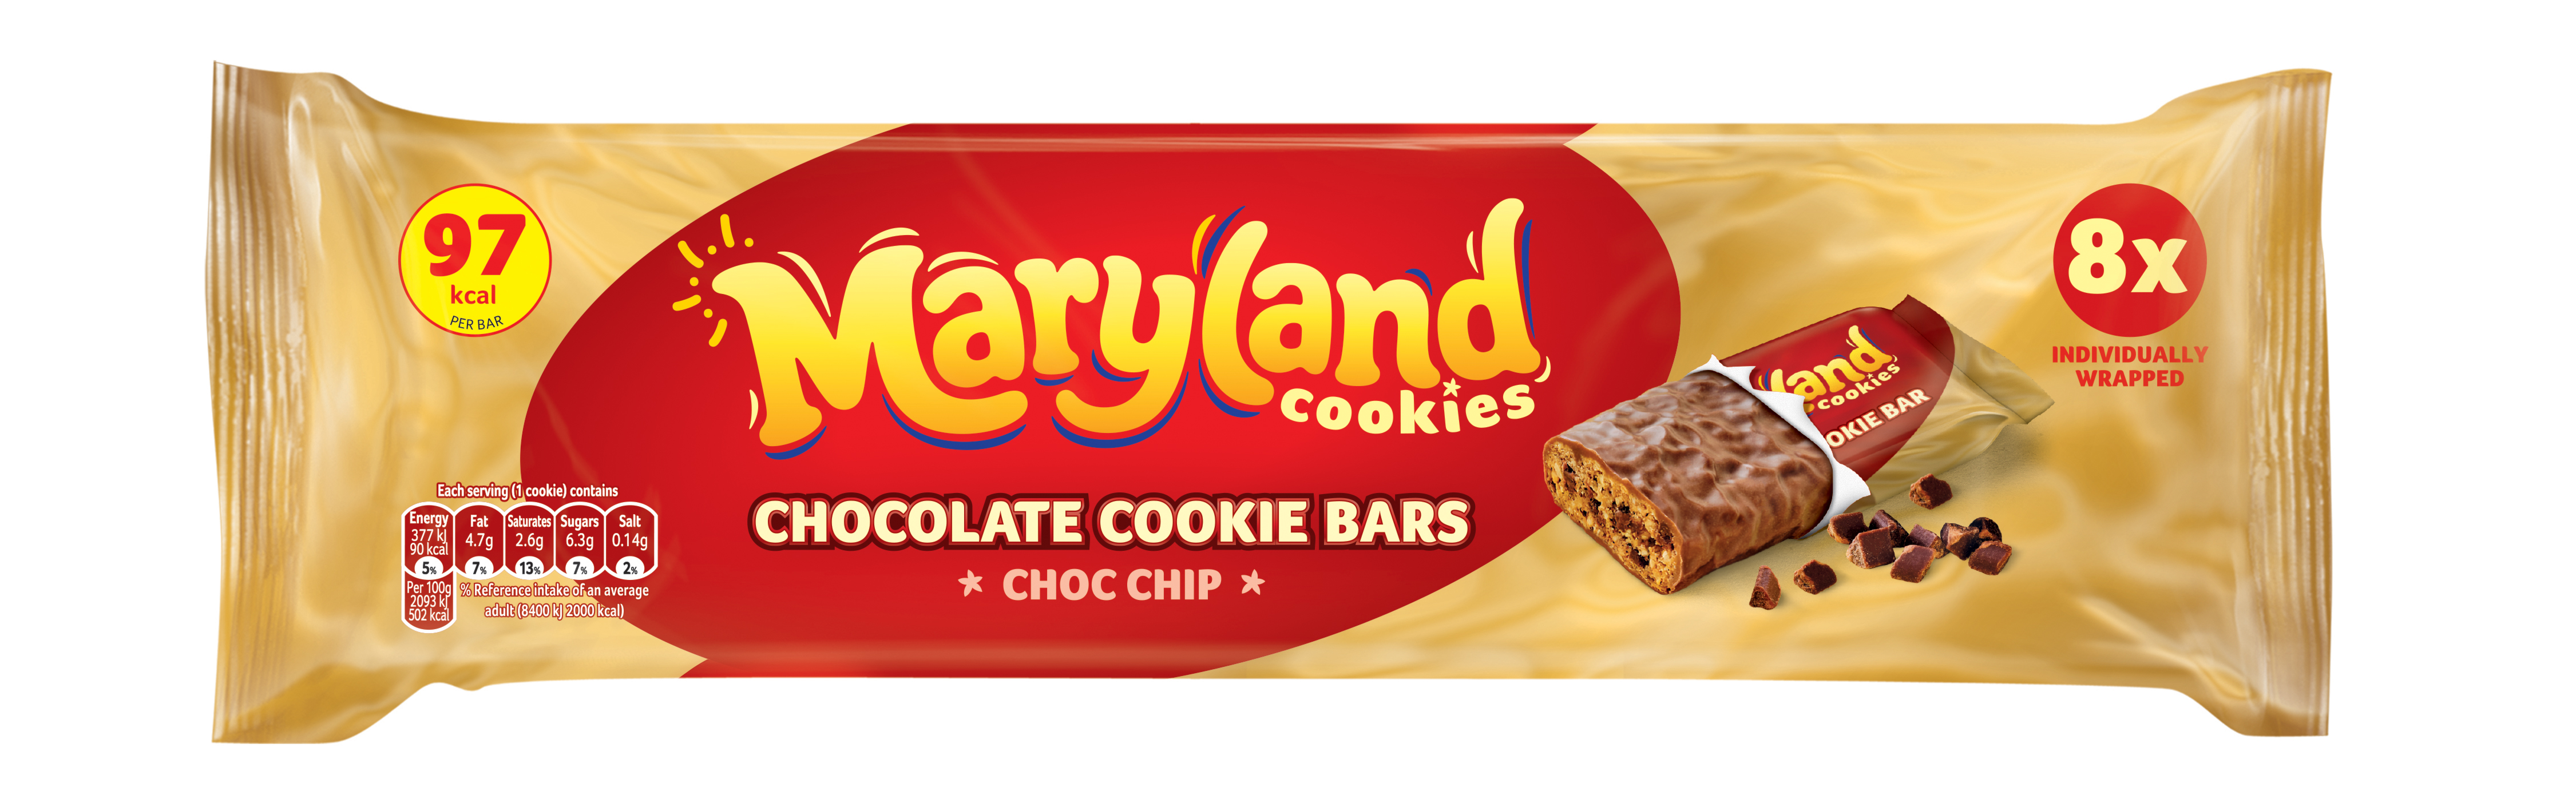 Maryland-Cookie-Bar.jpg